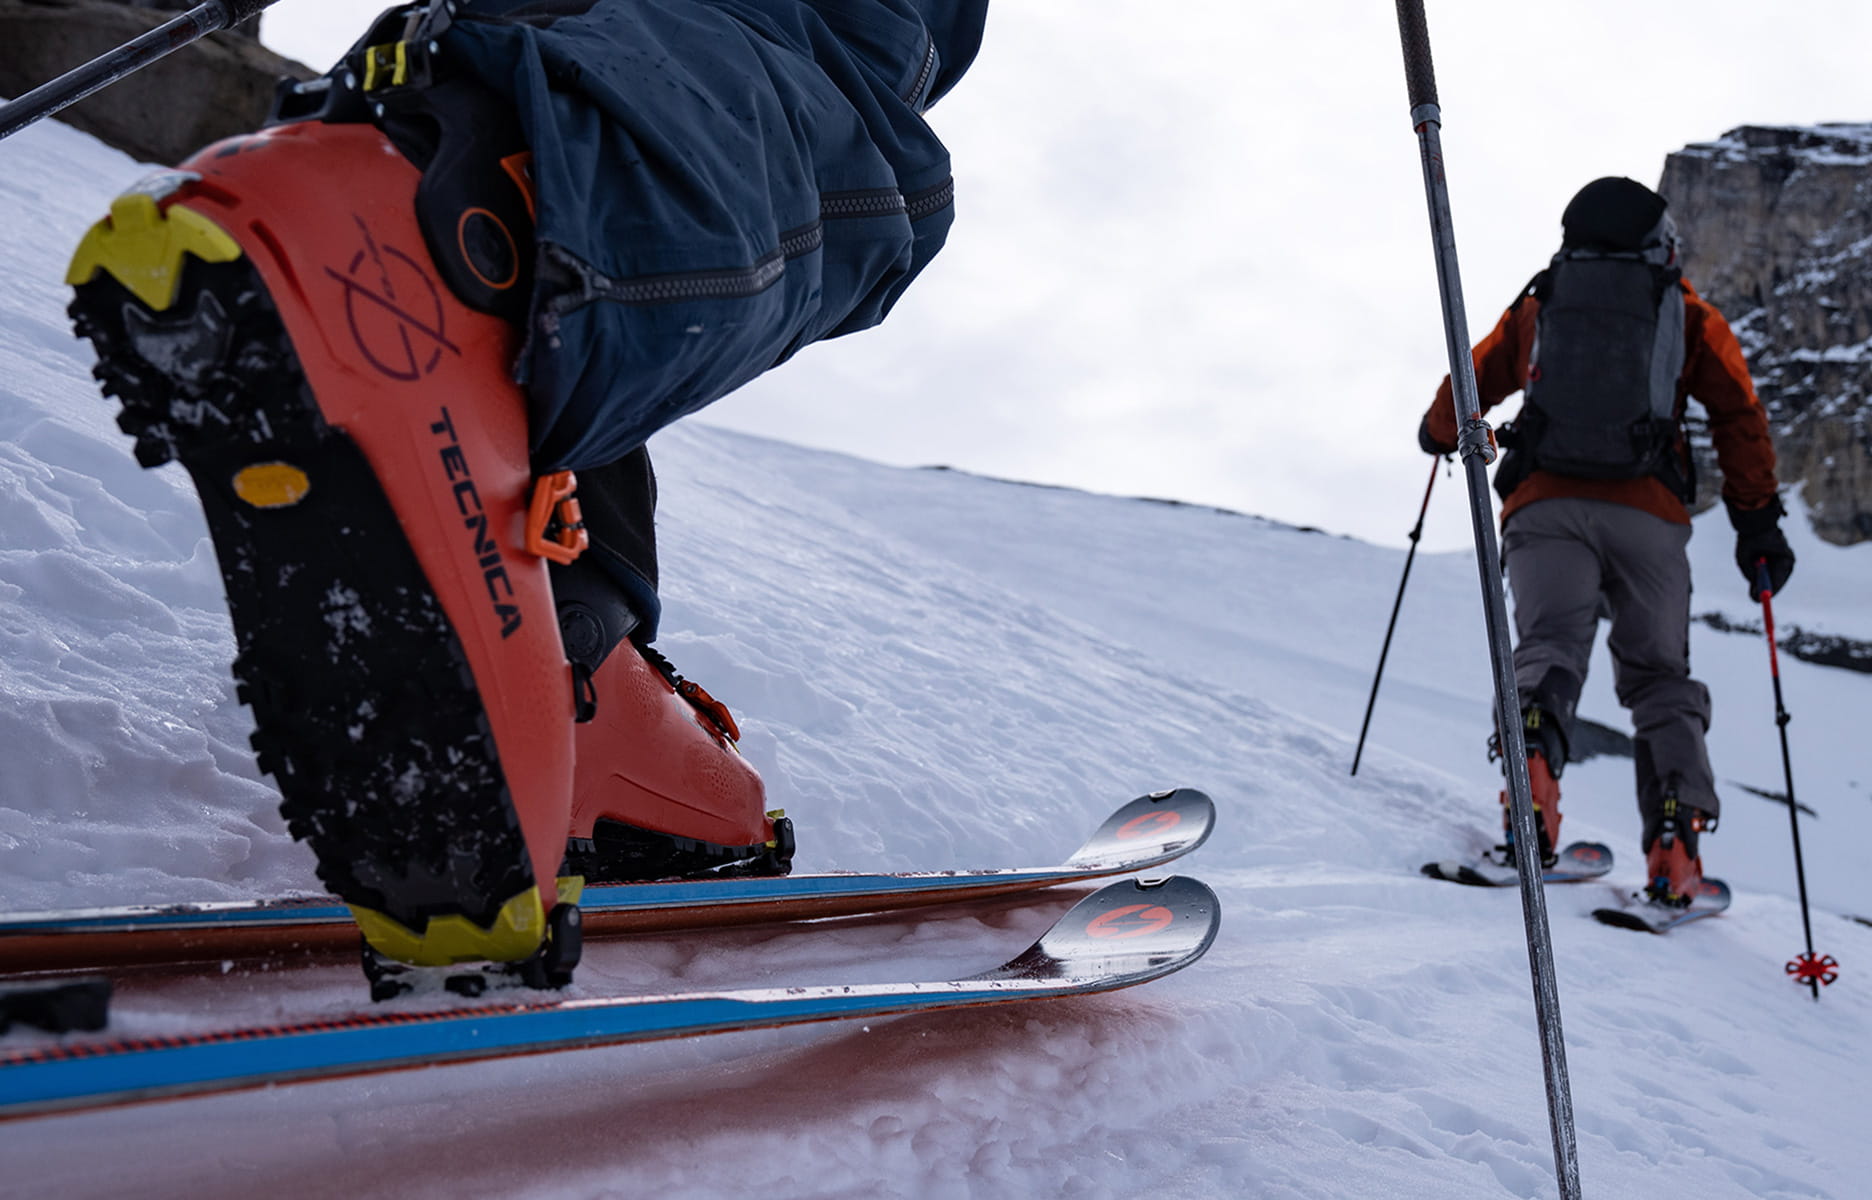 Mode au ski, Tenue de ski, Vetement sport